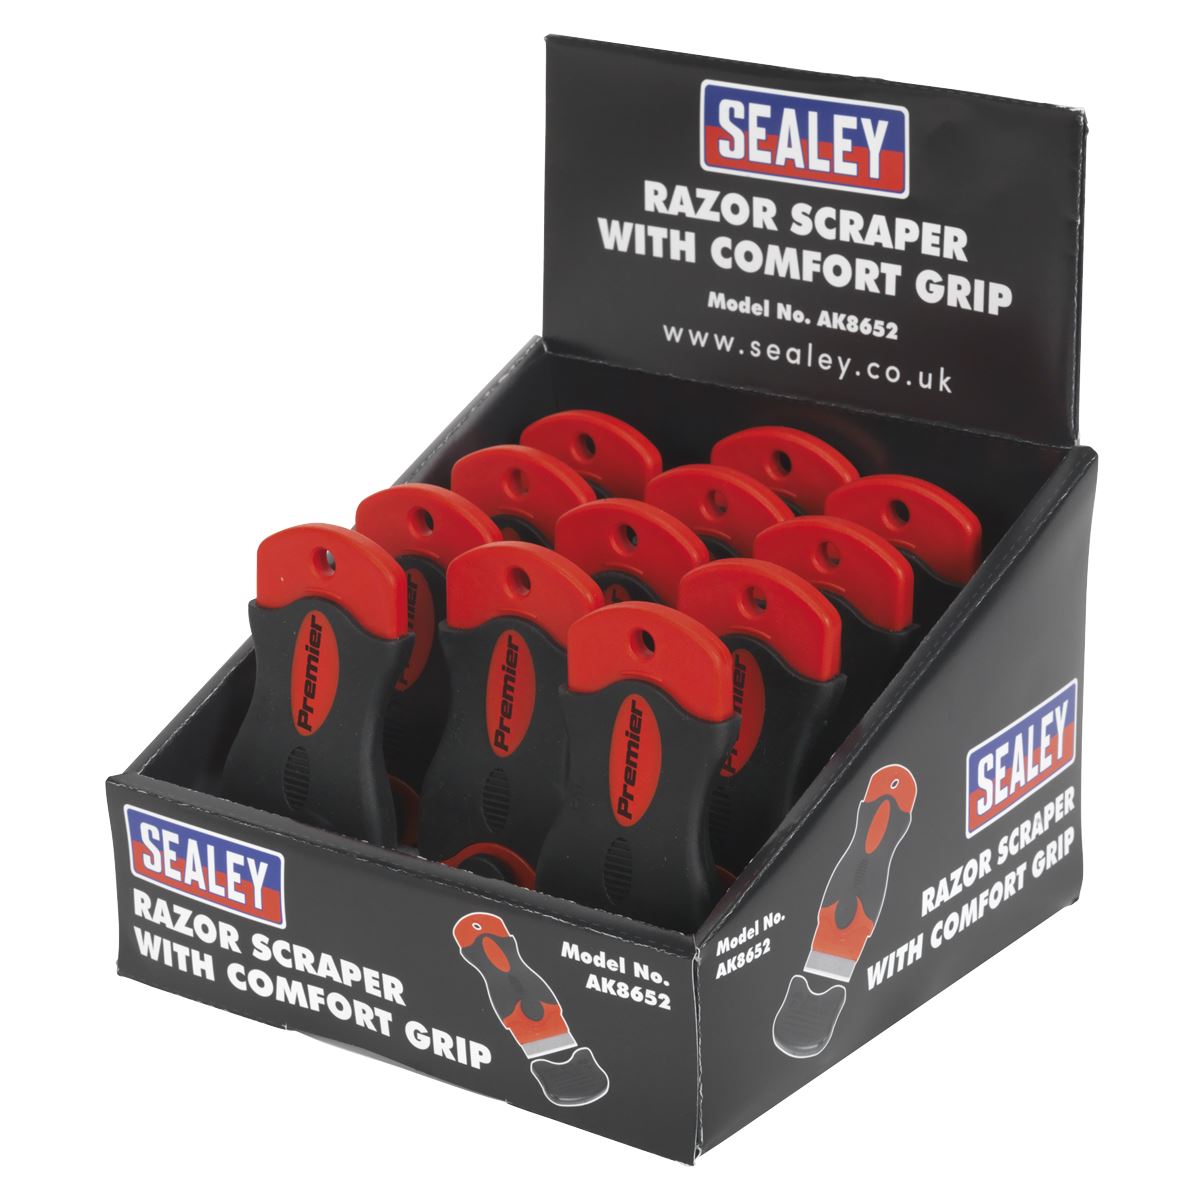 Sealey Premier Razor Scraper with Comfort Grip Display Box of 12